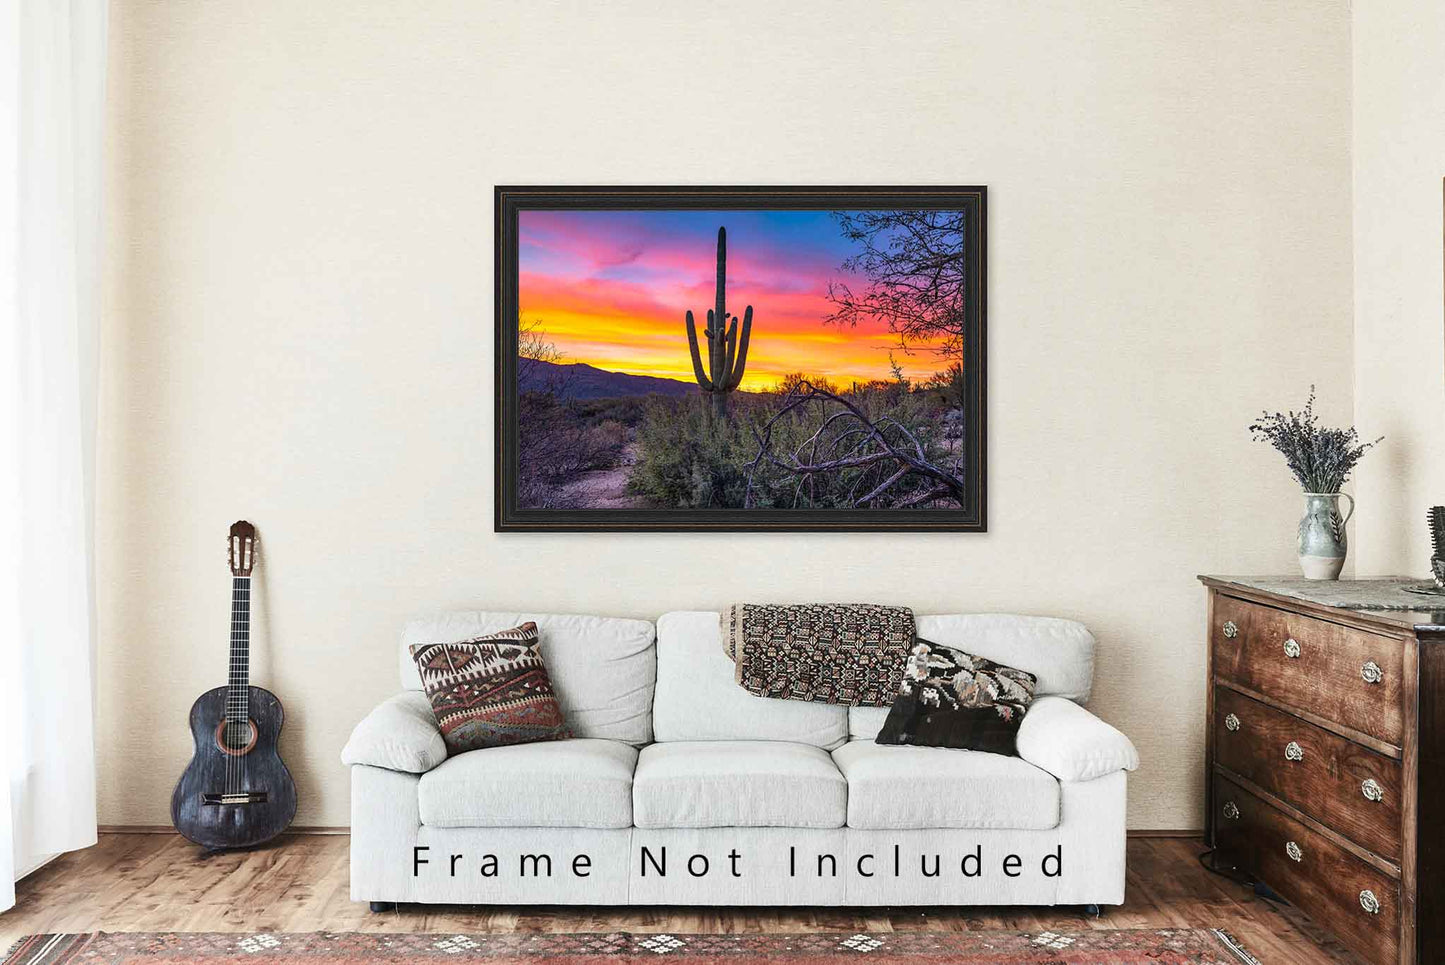 Saguaro Cactus Photography Print | Sonoran Desert Picture | Arizona Wall Art | Southwestern Photo | Western Decor | Not Framed